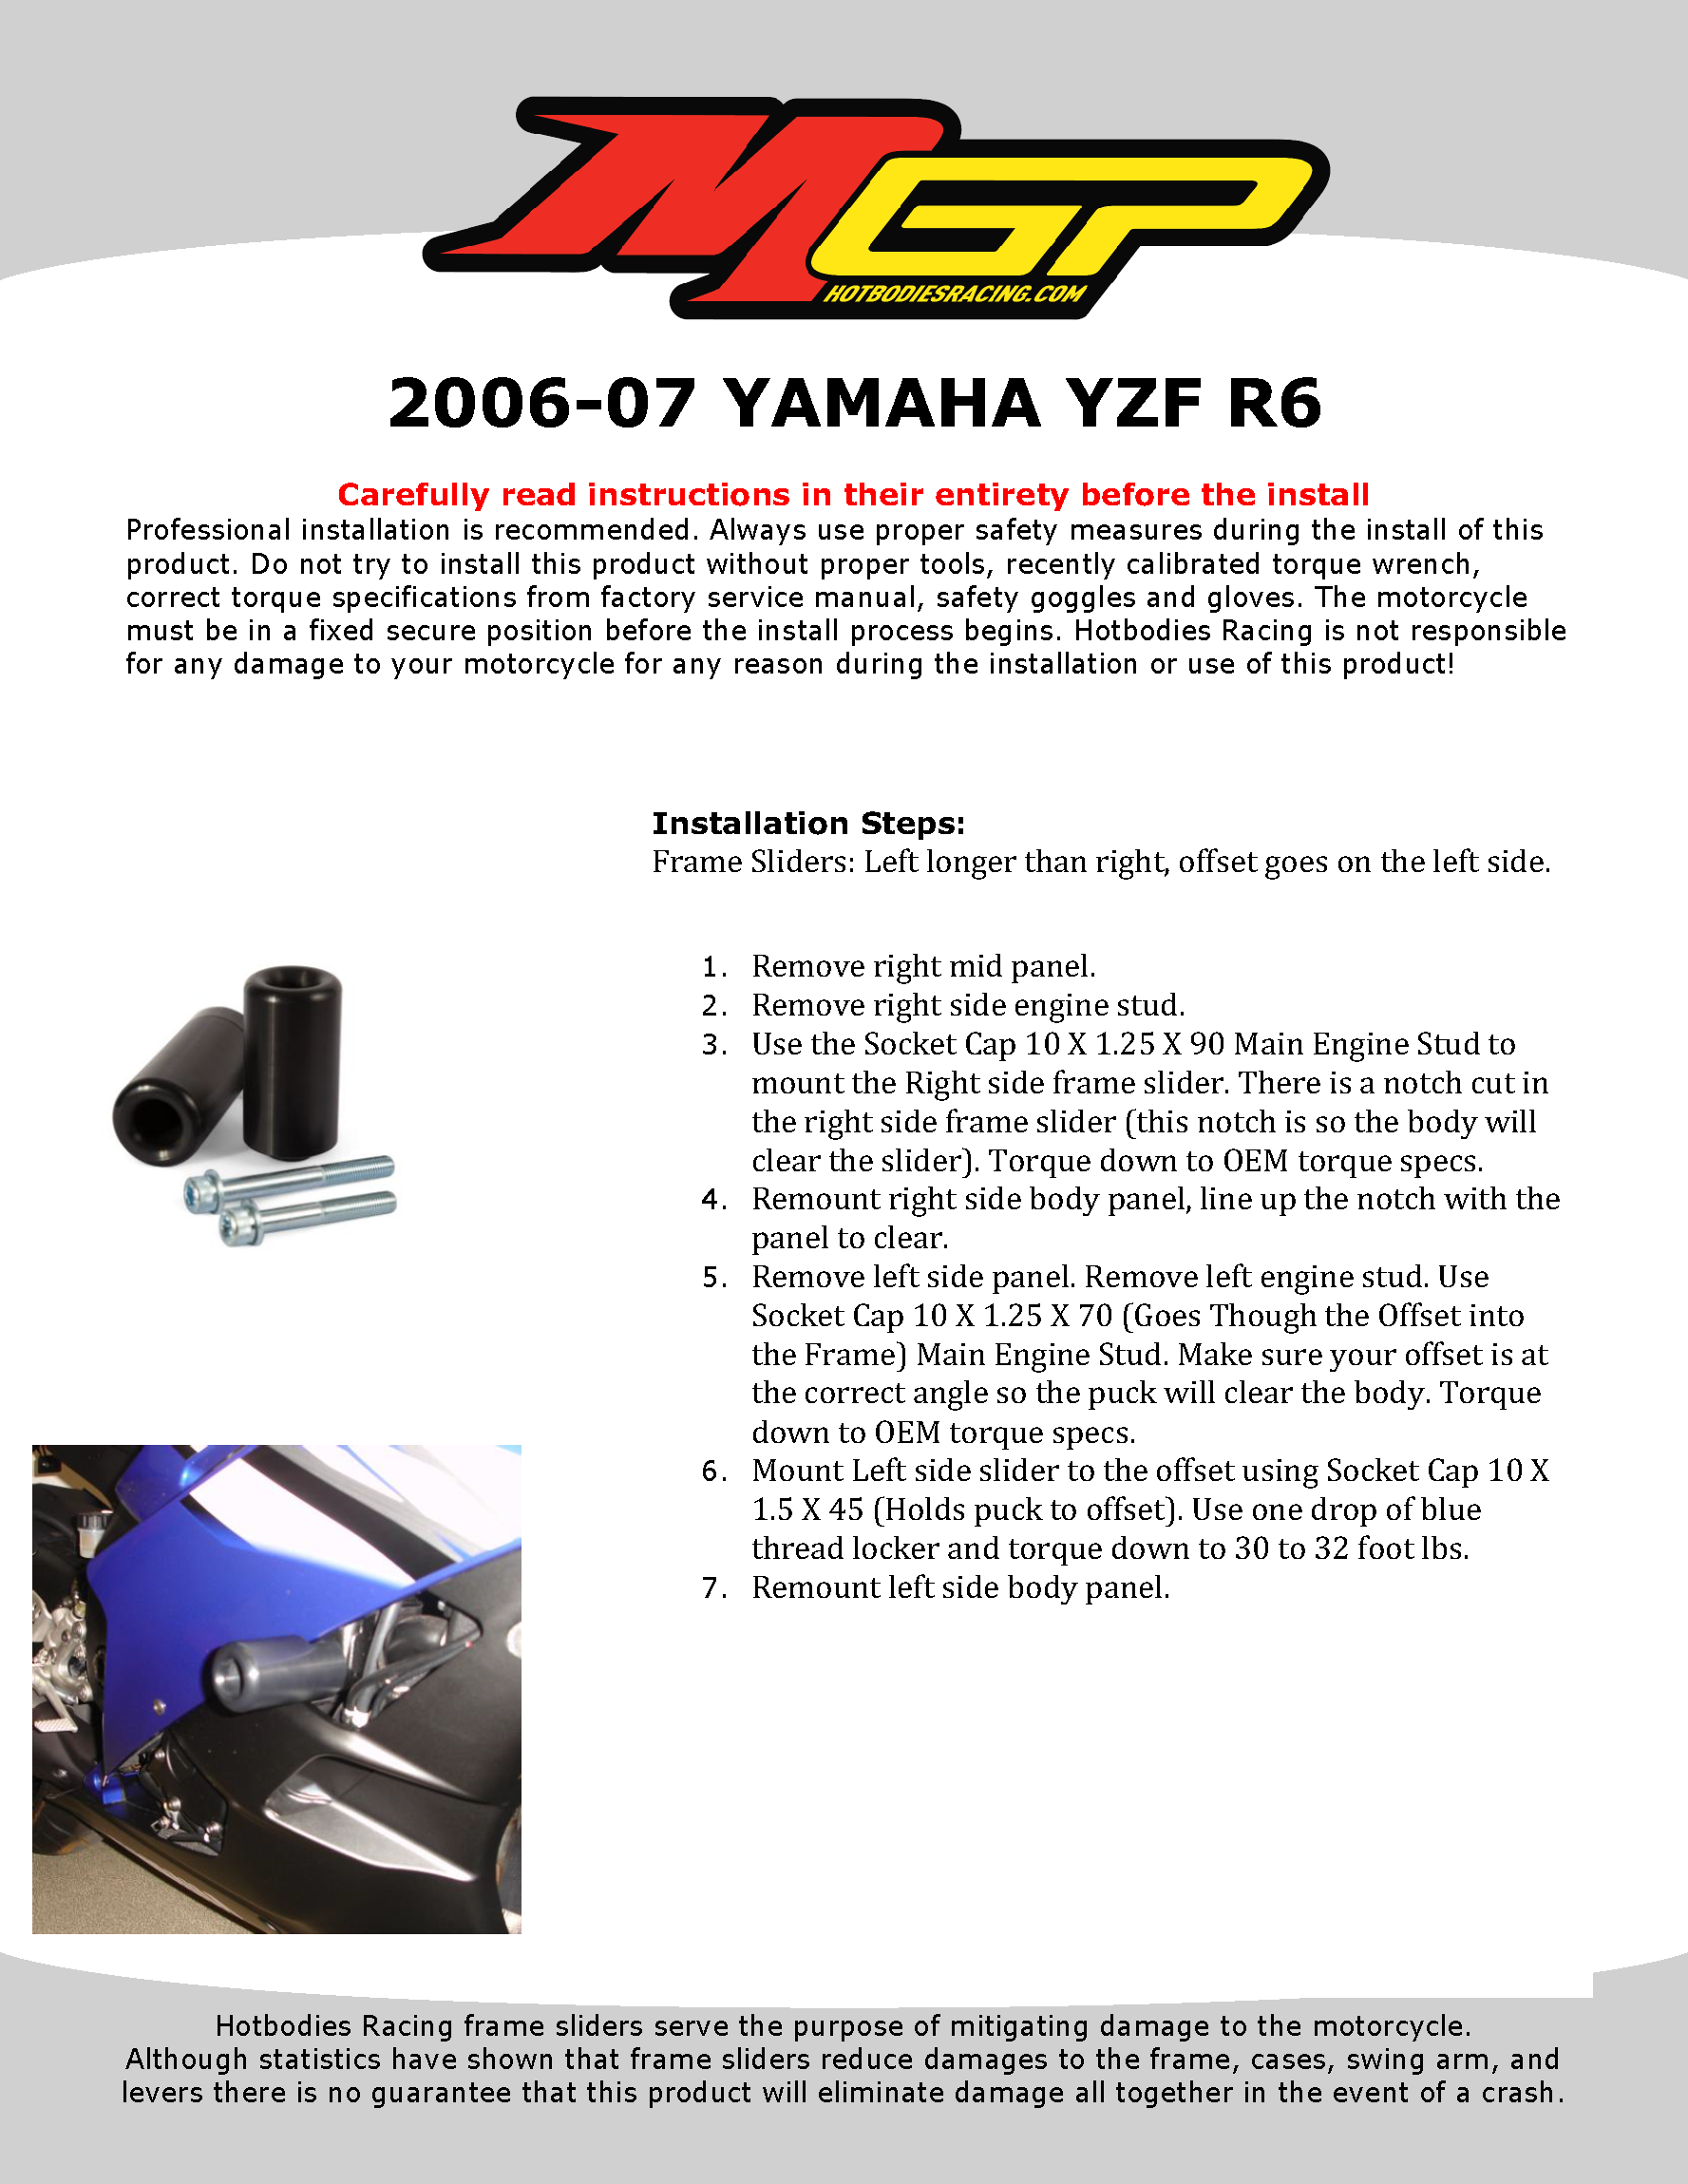 

2006-07 YAMAHA YZF R6 Frame Sliders Installation

